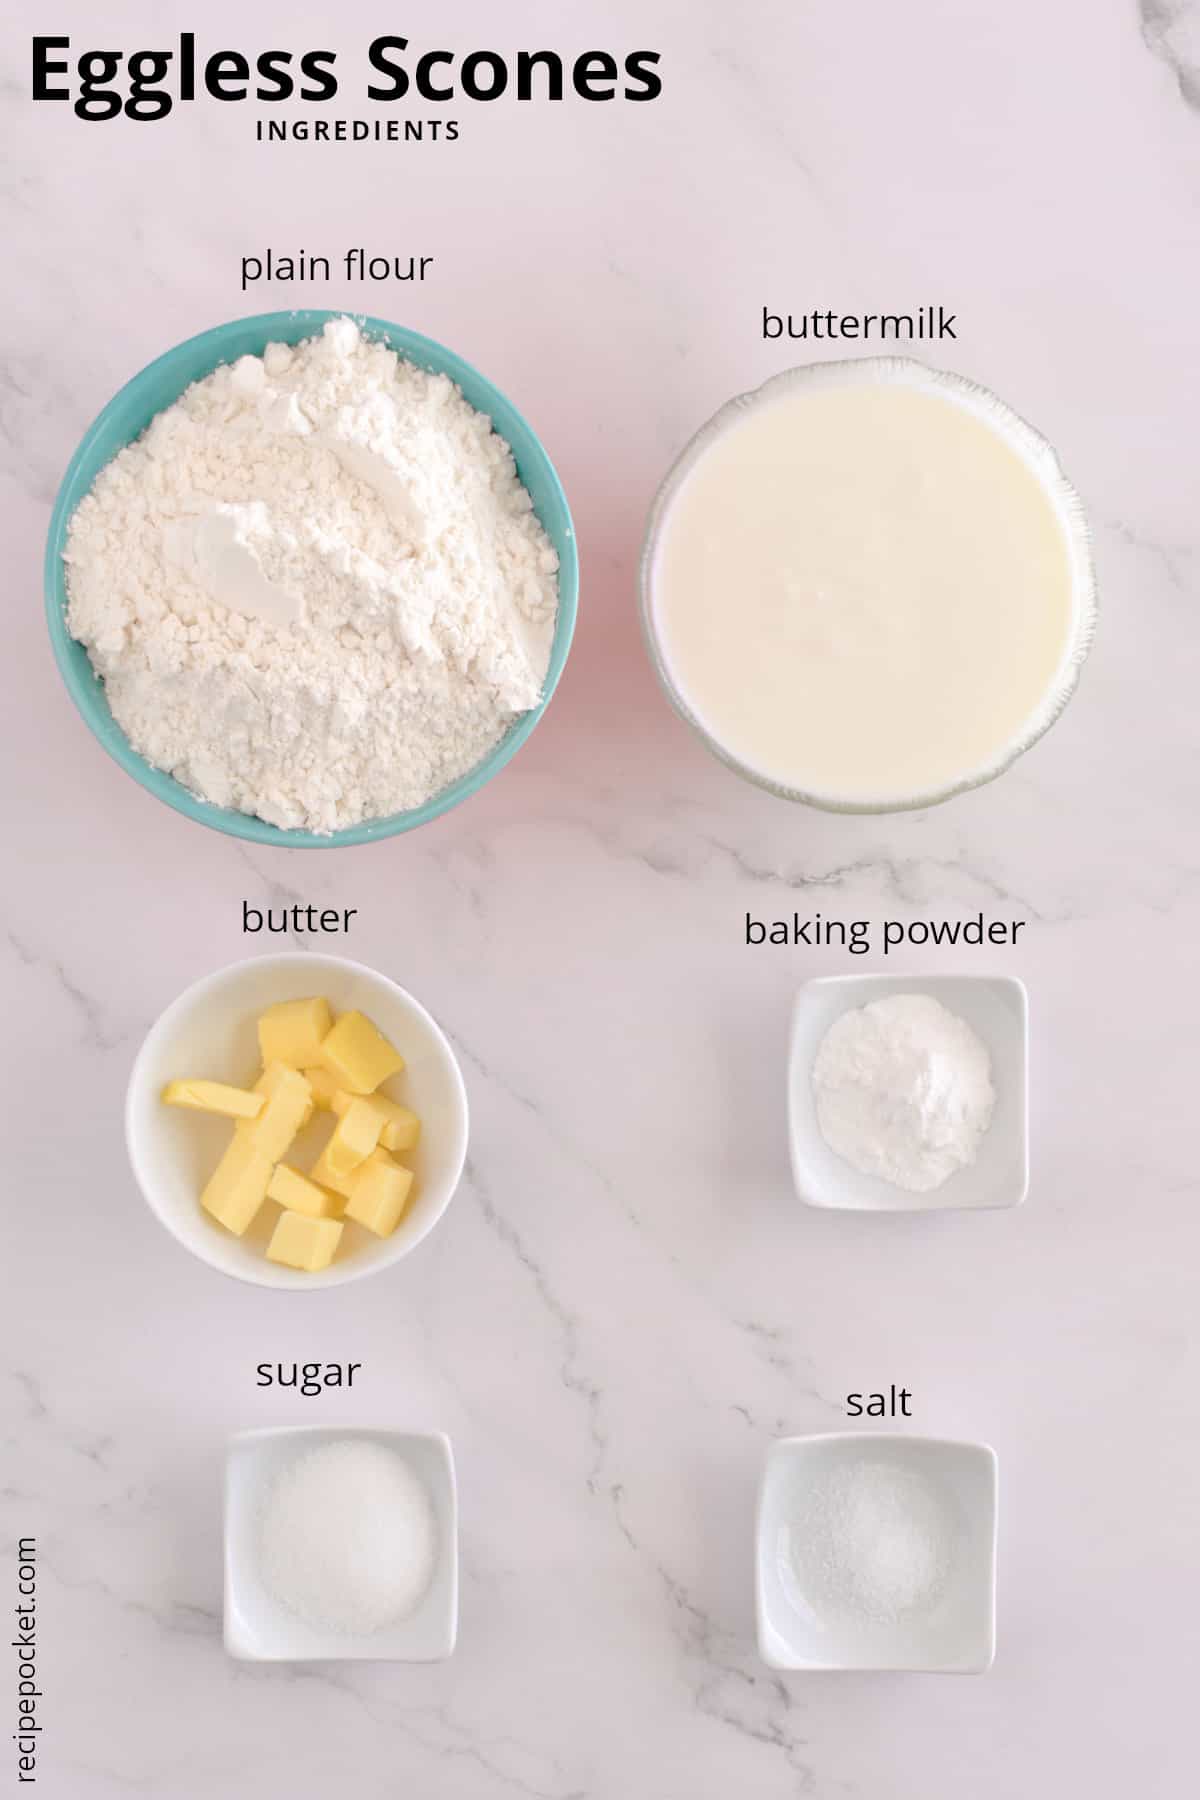 Image of ingredients for buttermilk scones.